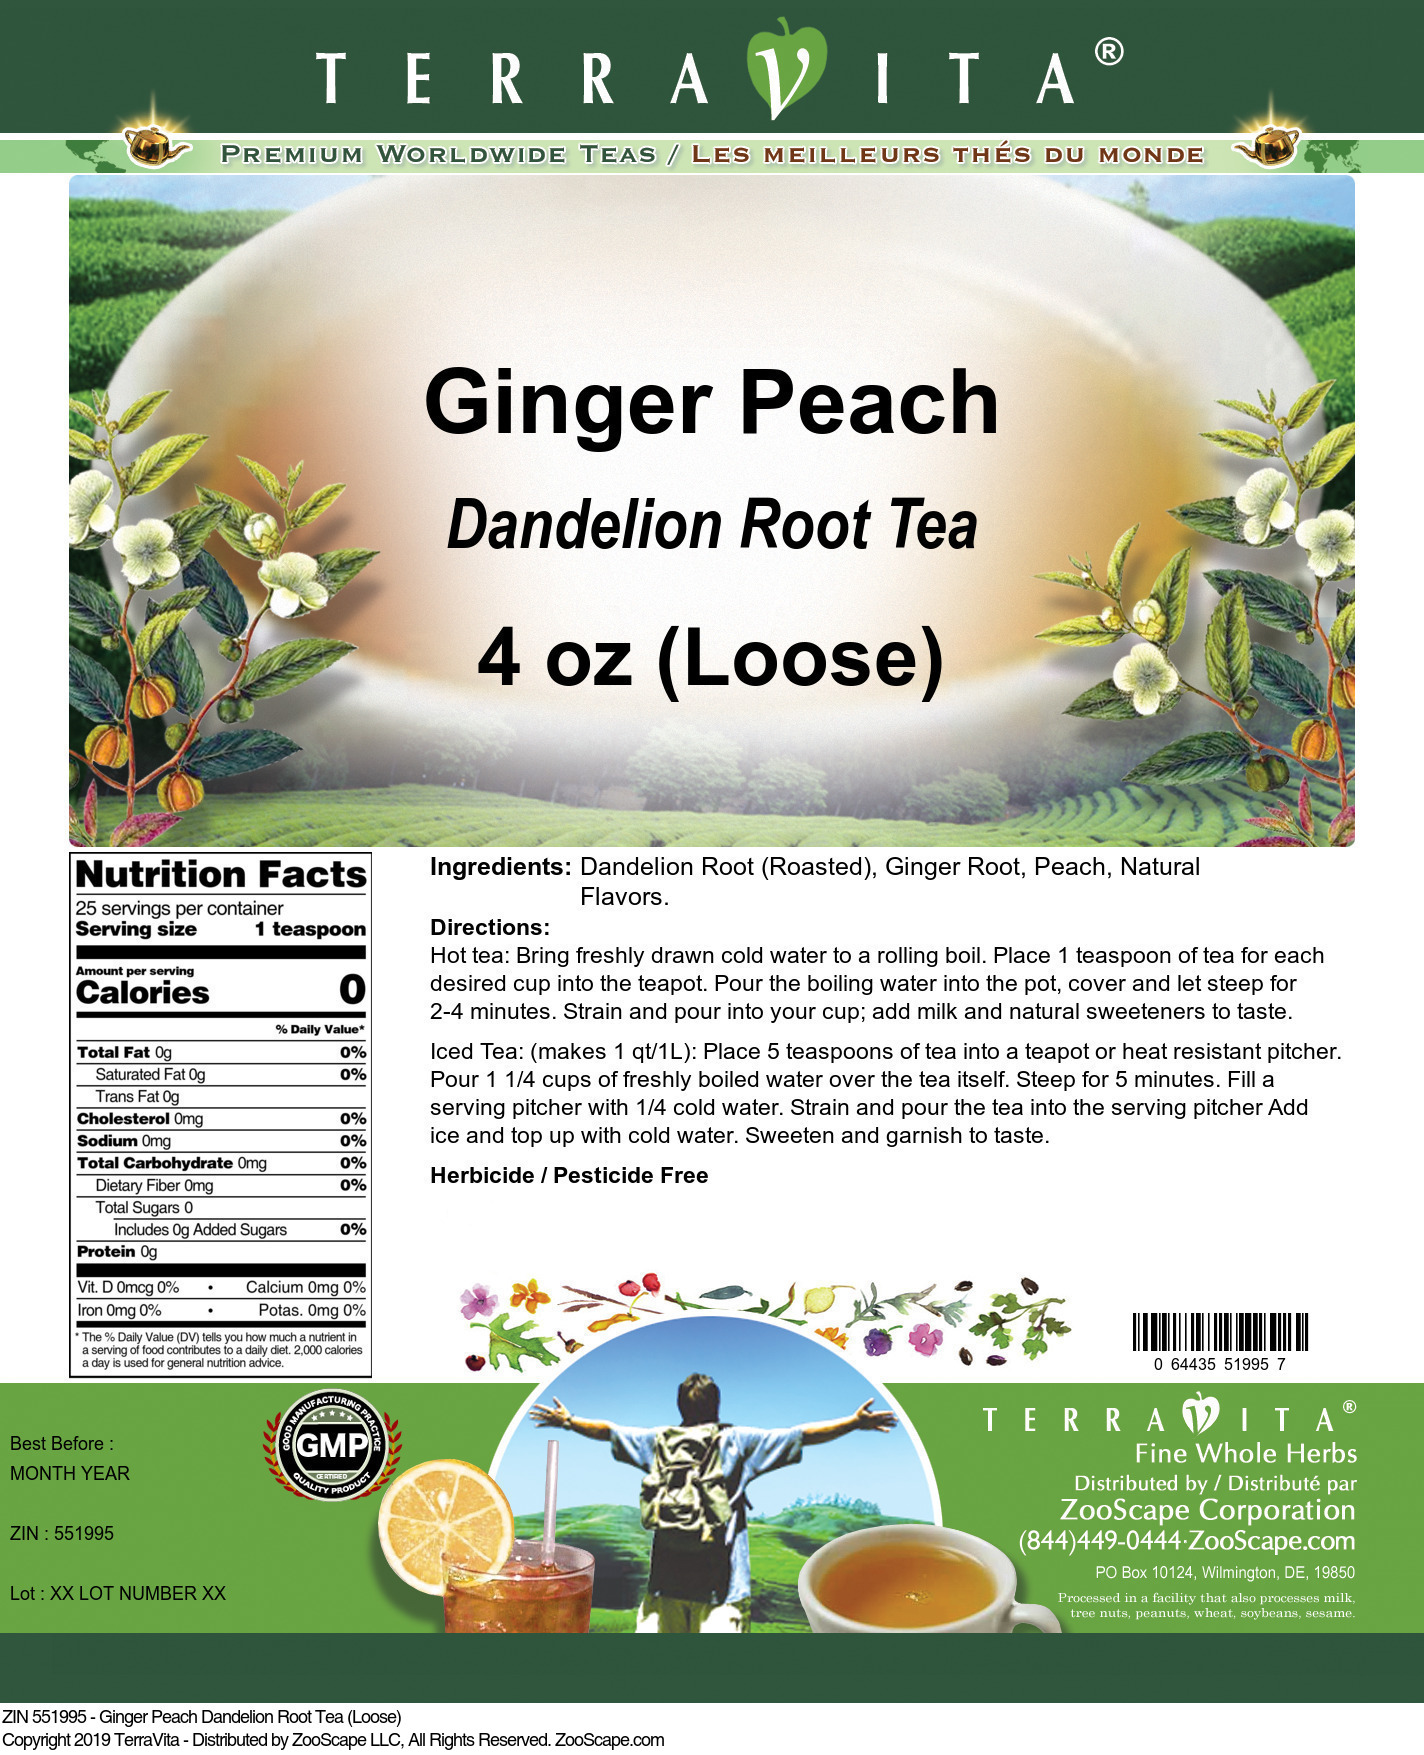 Ginger Peach Dandelion Root Tea (Loose) - Label